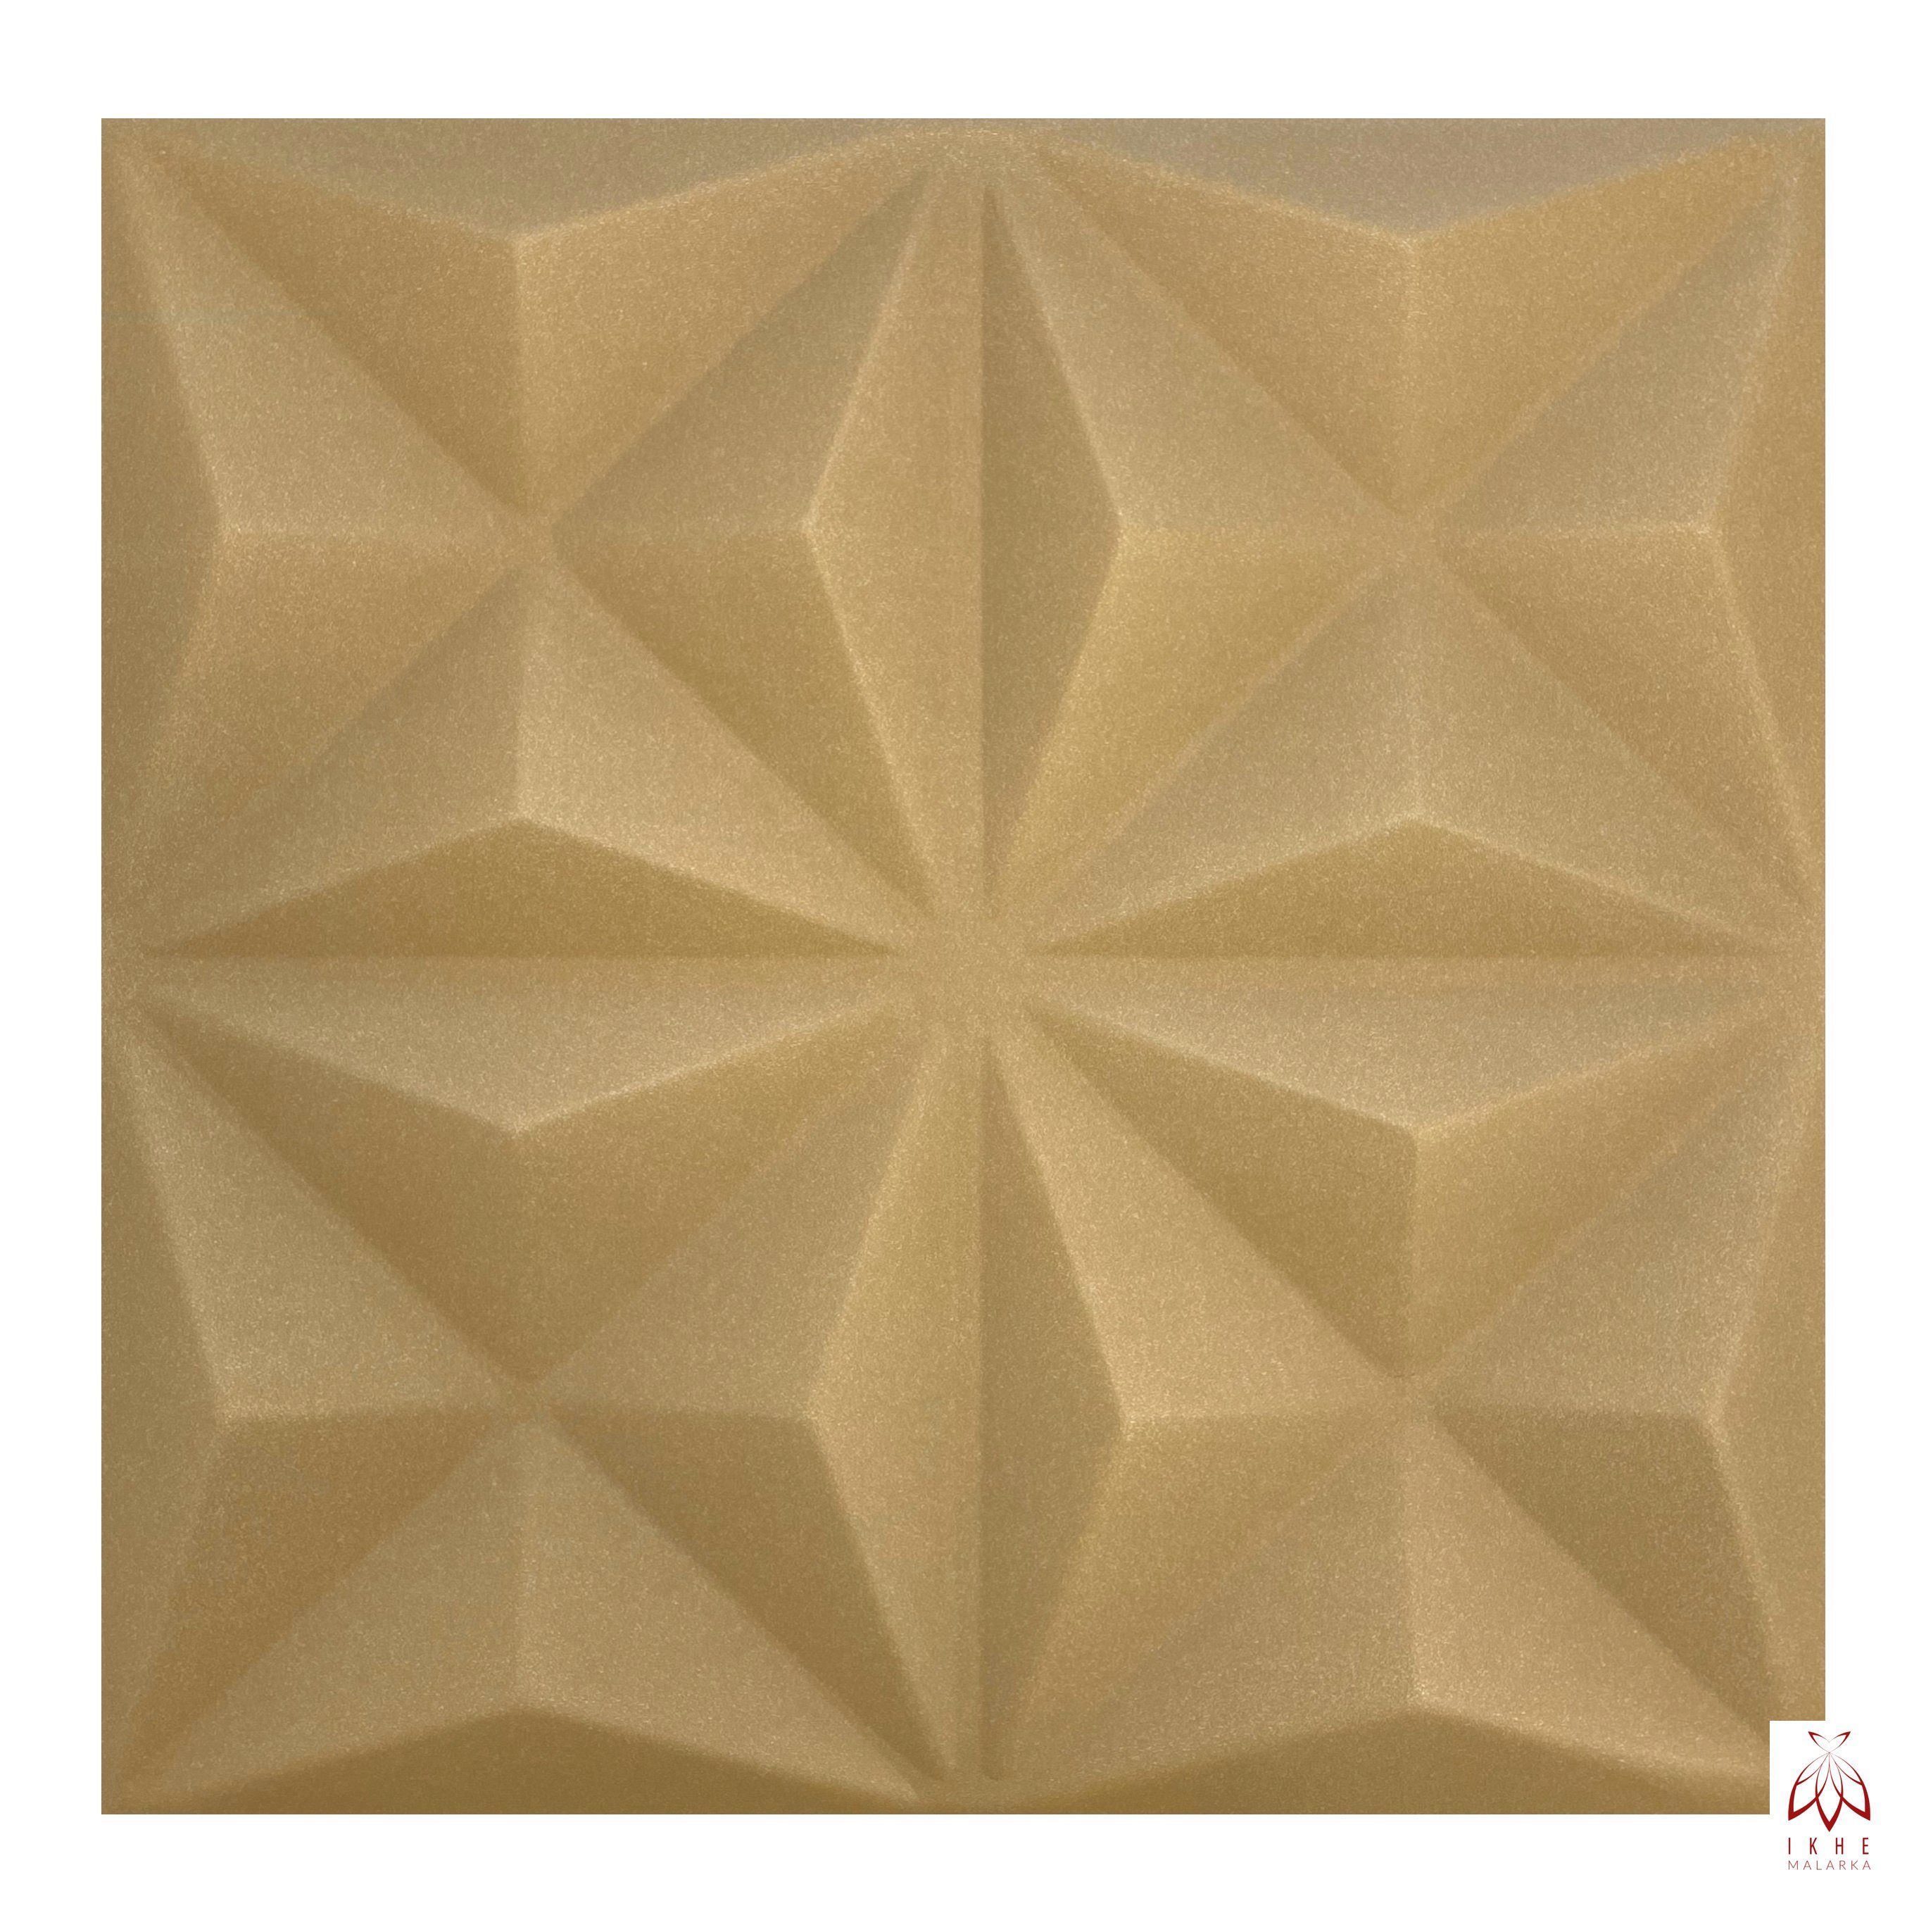 IKHEMalarka 3D Wandpaneel Polystyrol 3D Paneele Deckenpaneele 2-18 Quadratmeter, BxL: 50,00x50,00 cm, 0,25 qm, (72-tlg) Dekoren, Decken Wandverkleidung